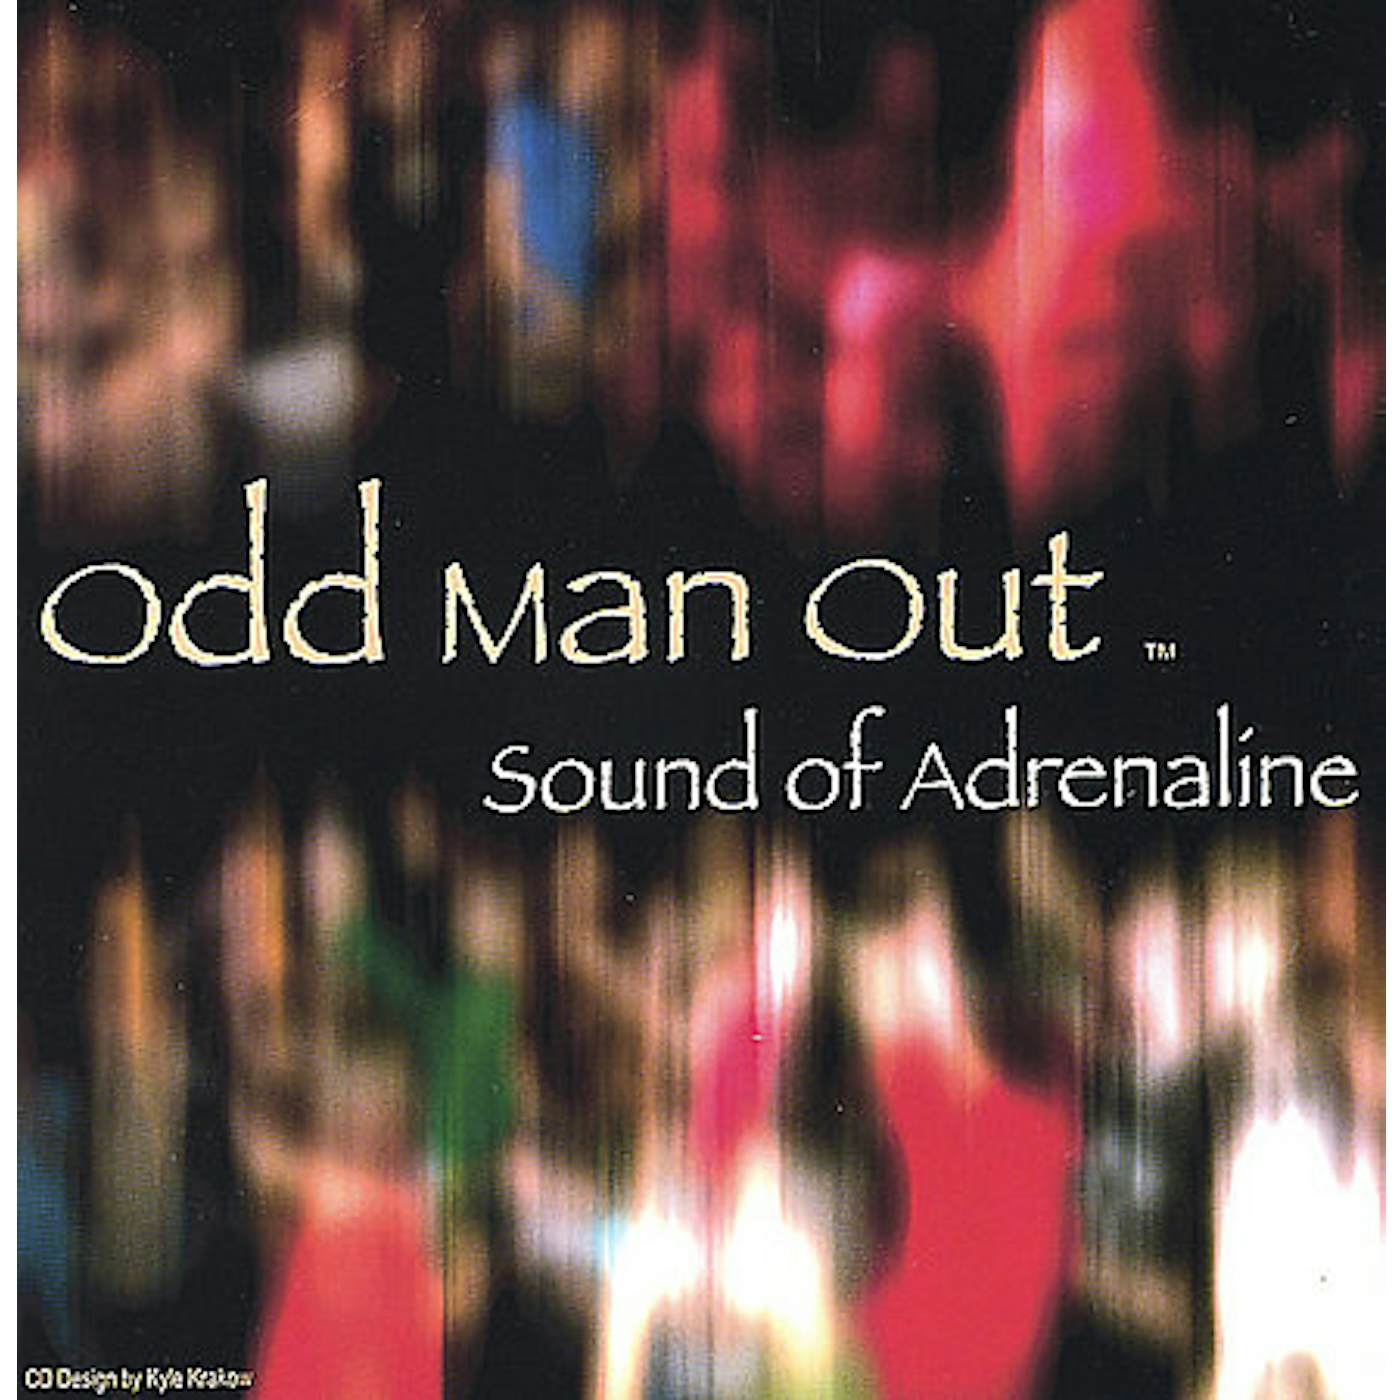 Odd Man Out SOUND OF ADRENALINE CD